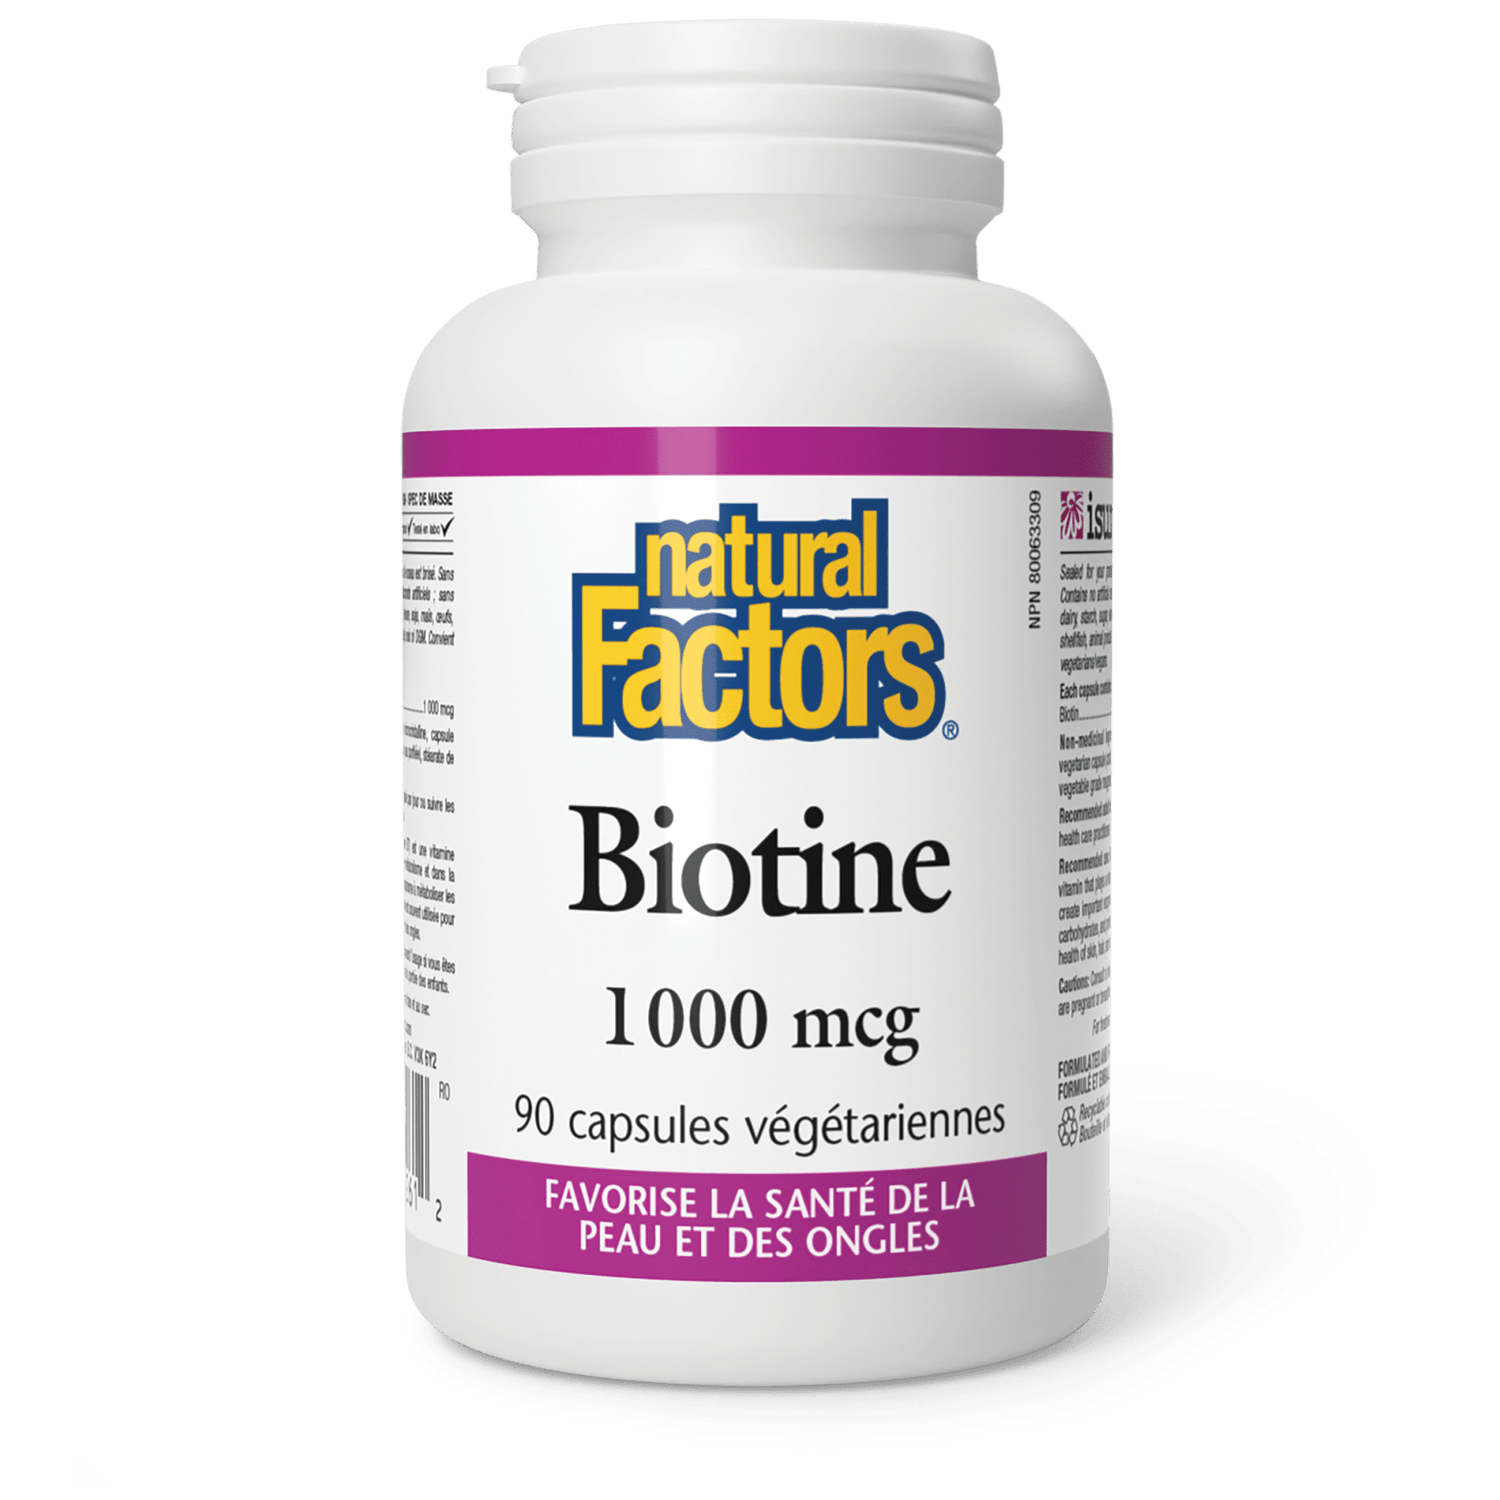 Biotine 1 000 mcg, Natural Factors|v|image|1261